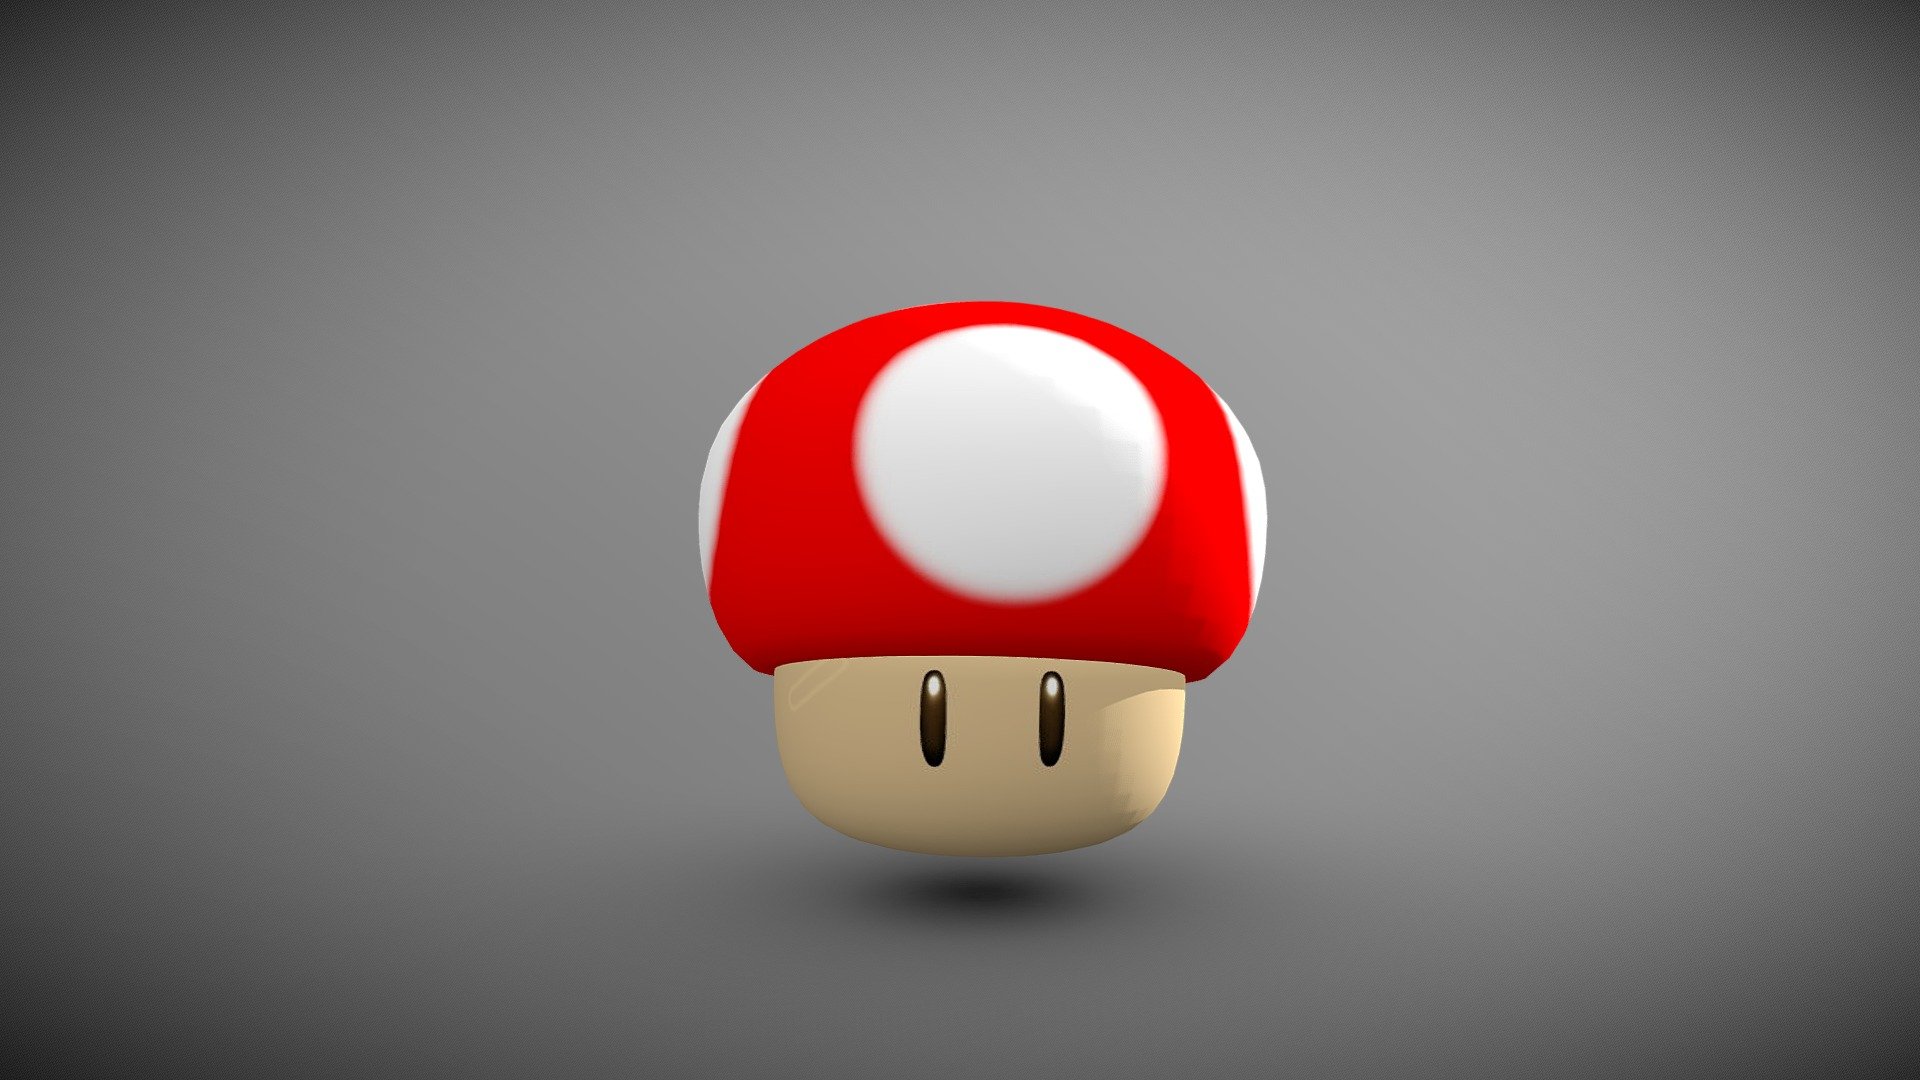 Red Mario Mushroom 3d Model By Alisha Alishabegum 1de9a75 Sketchfab 6078